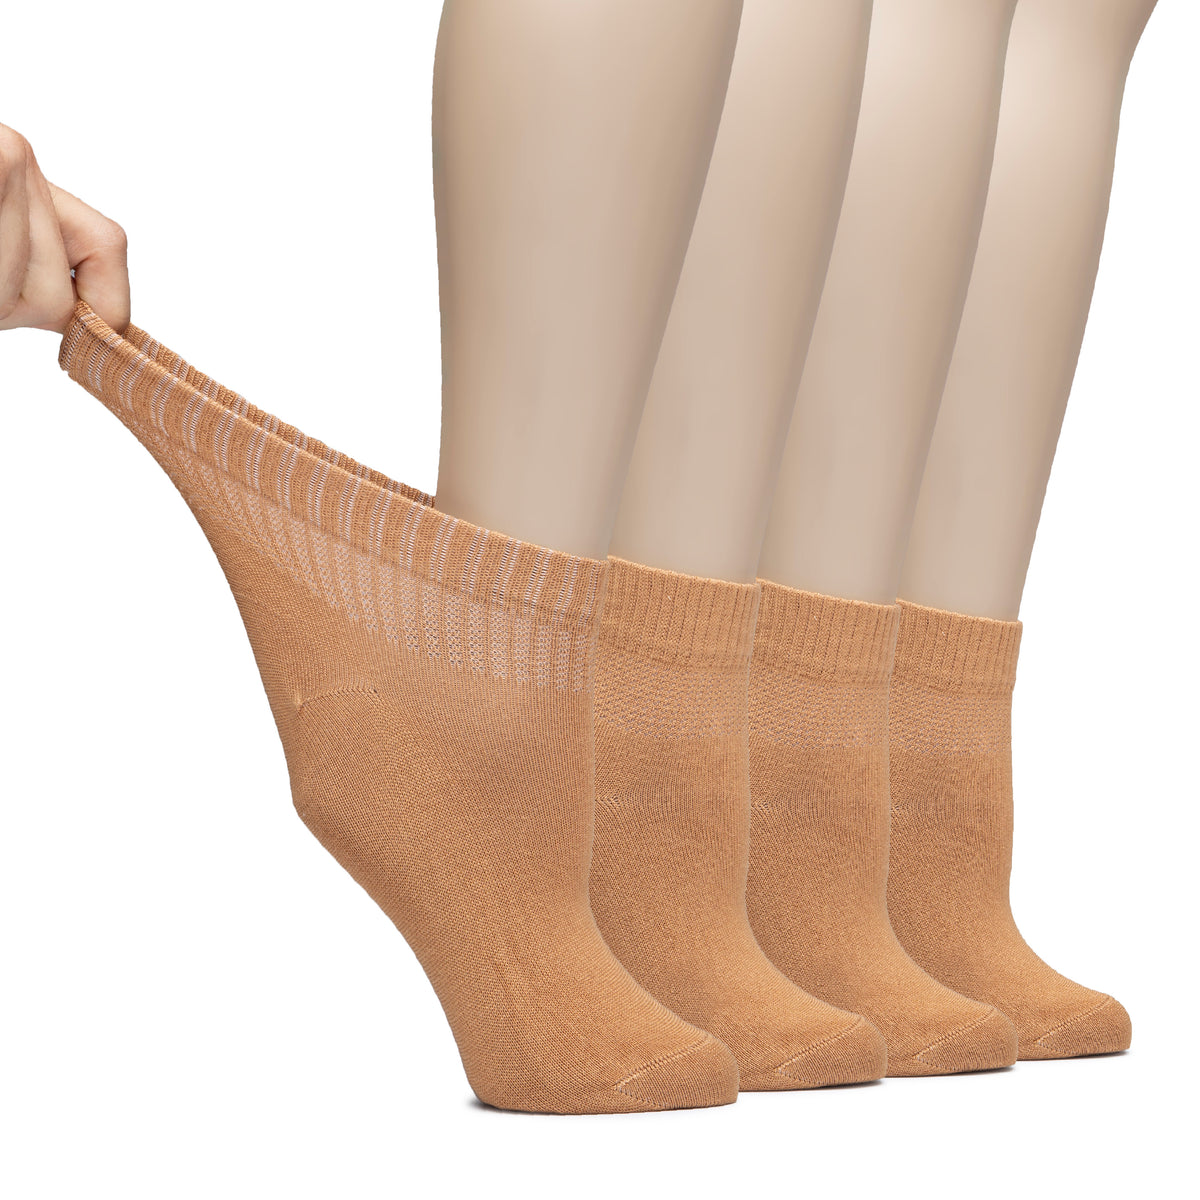 Hugh Ugoli Lightweight Women's Diabetic Ankle Socks Bamboo Thin Socks Seamless Toe and Non-Binding Top, 4 Pairs, , Shoe Size: 6-9/10-12 | Shoe Size: 10-12 | Hazel